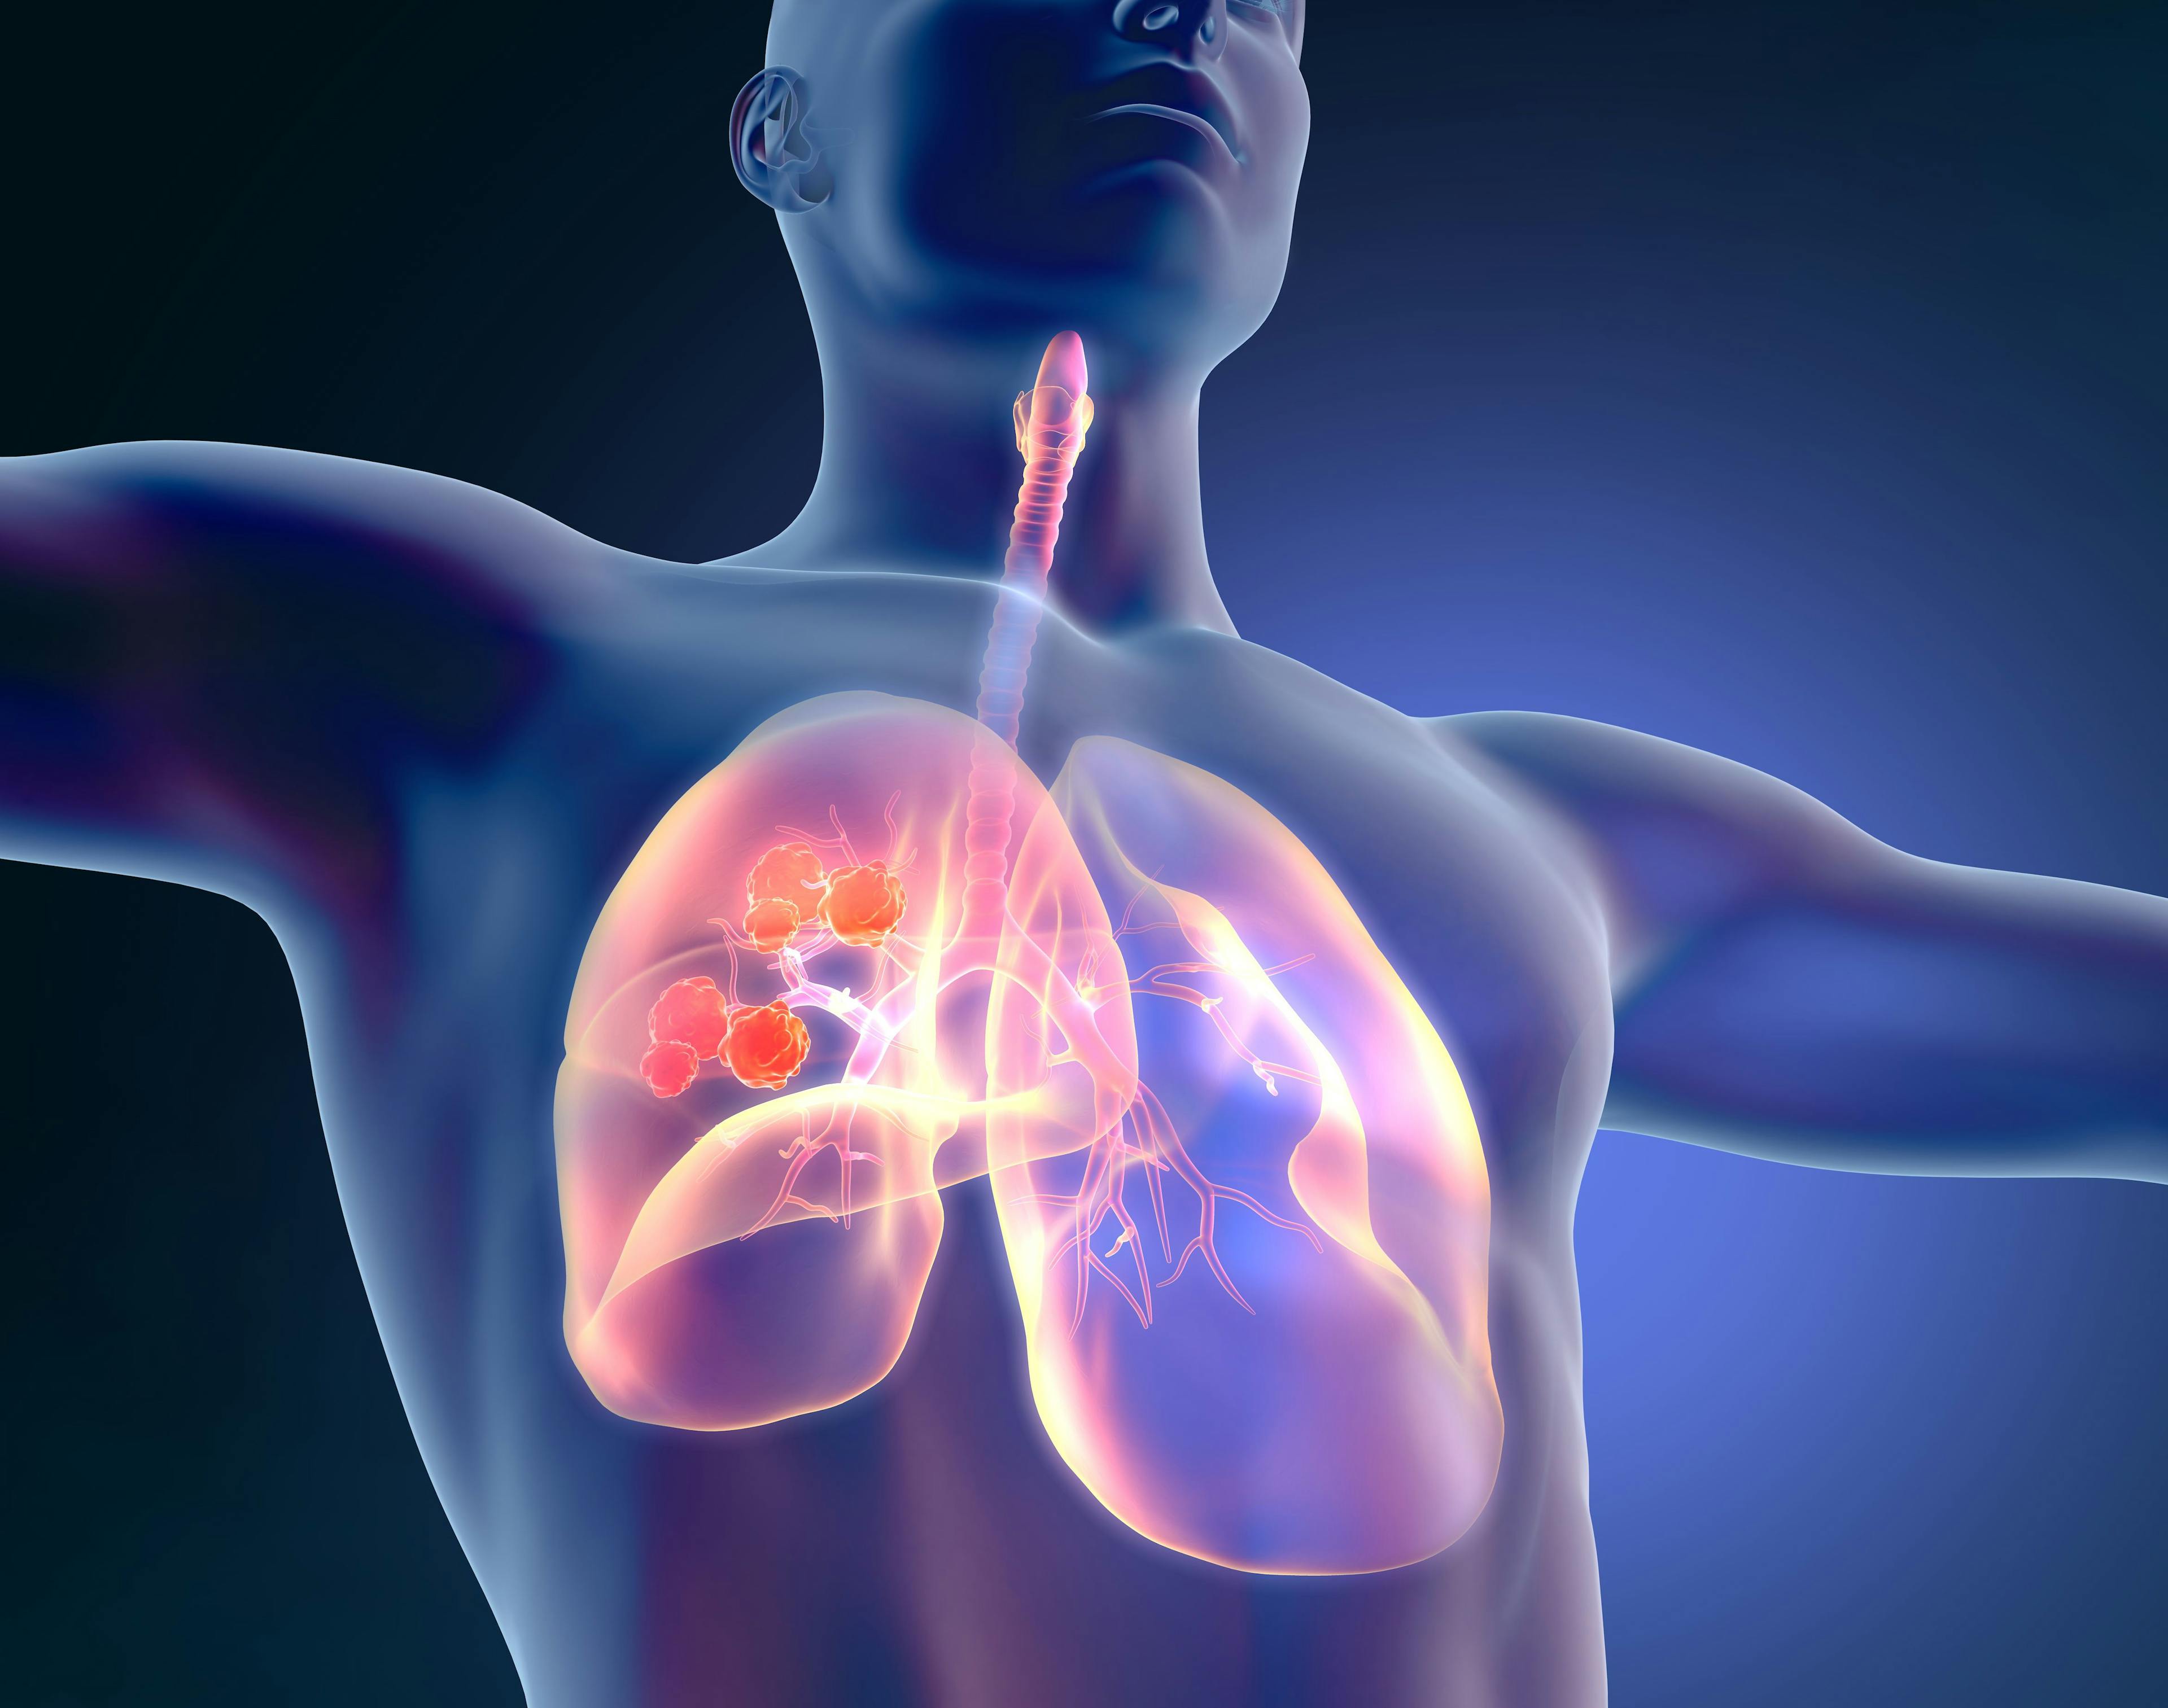 Lung cancer, medical illustration | Image Credit: © Axel Kock - www.stock.adobe.com